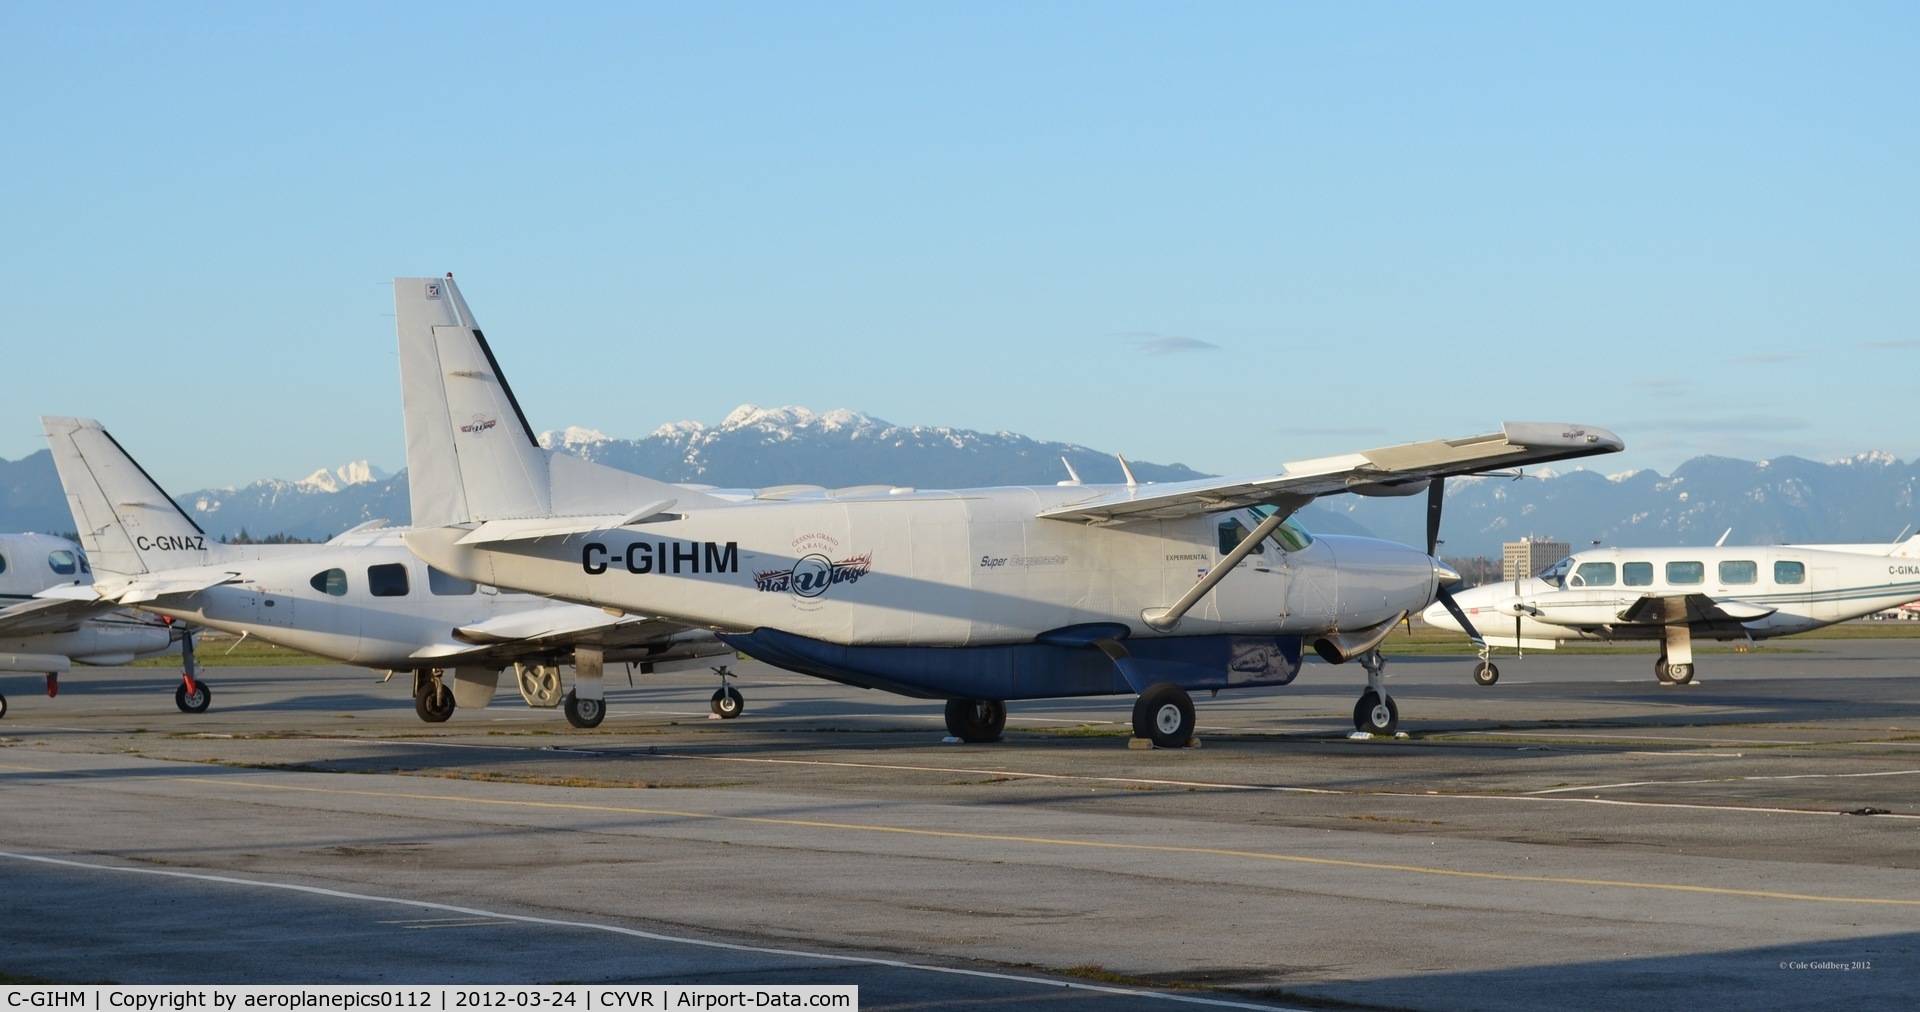 C-GIHM, 1988 Cessna 208B Super Cargomaster C/N 208B0118, C-GIHM at CYVR.